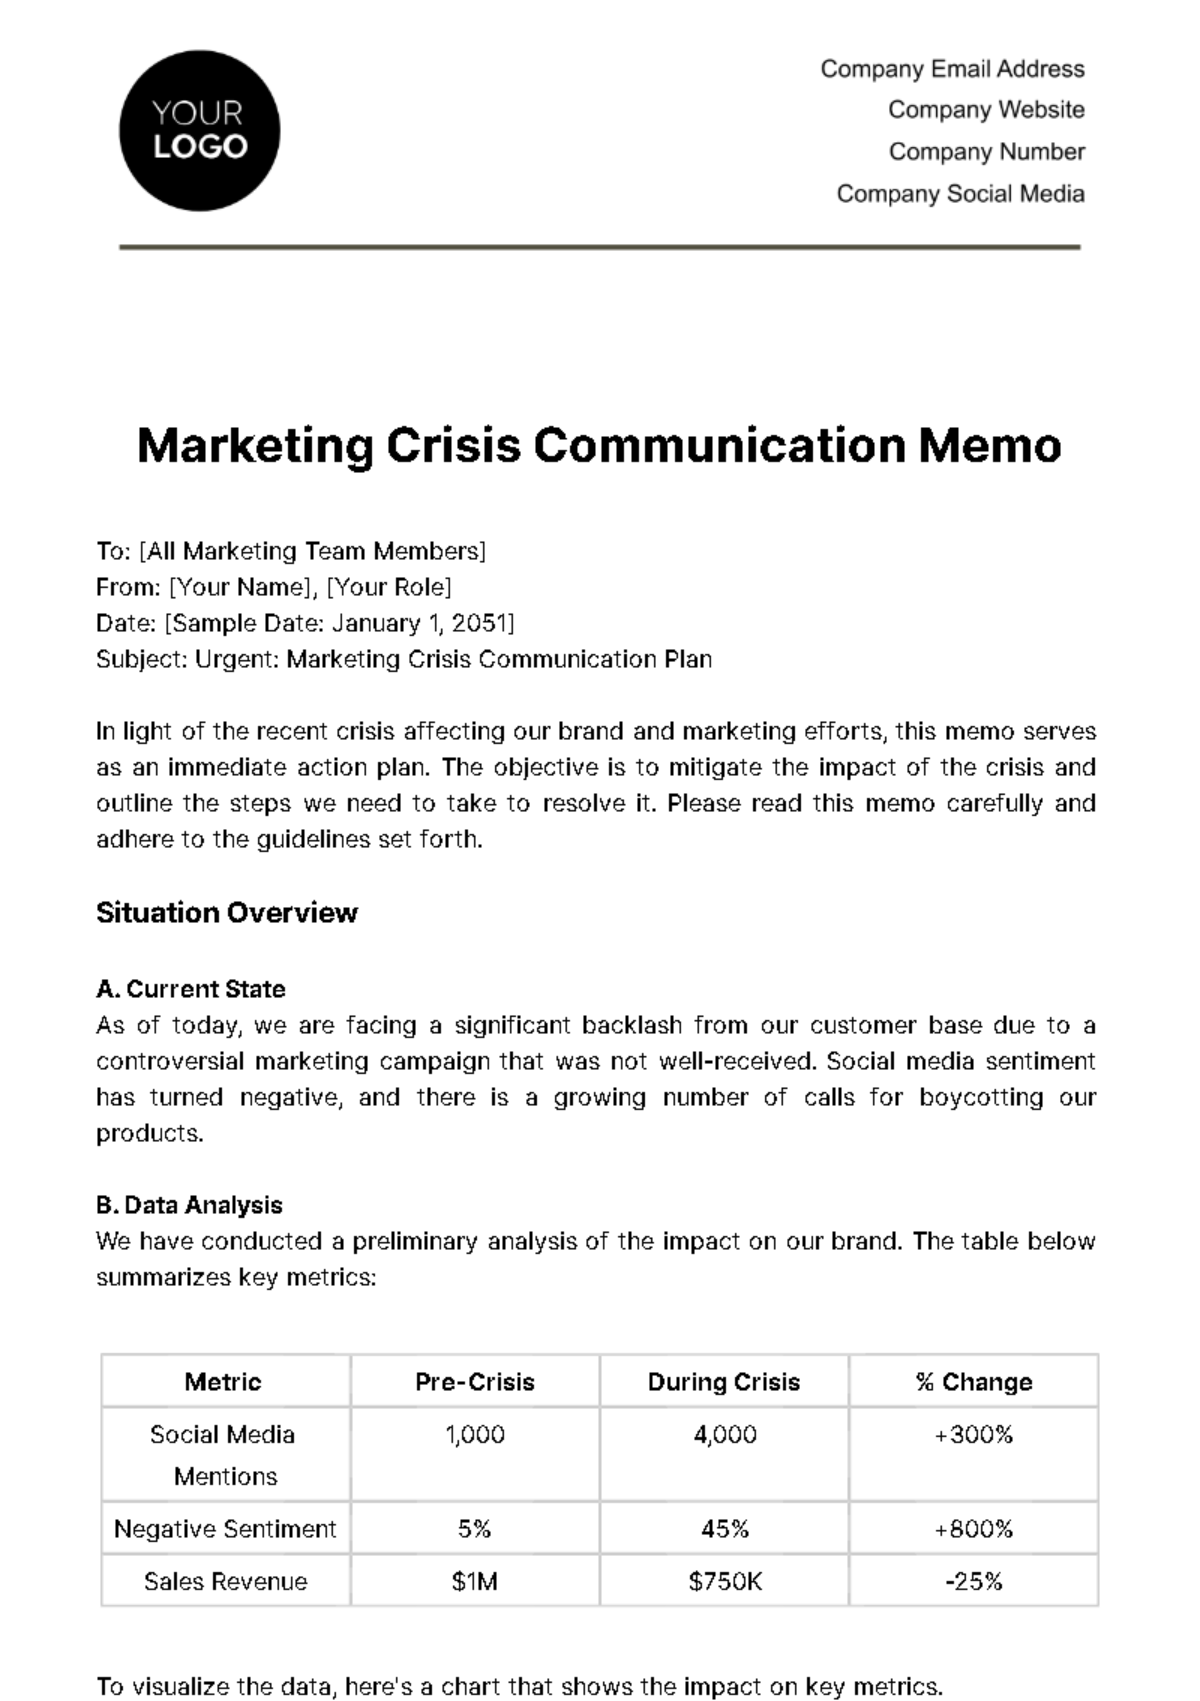 Marketing Crisis Communication Memo Template